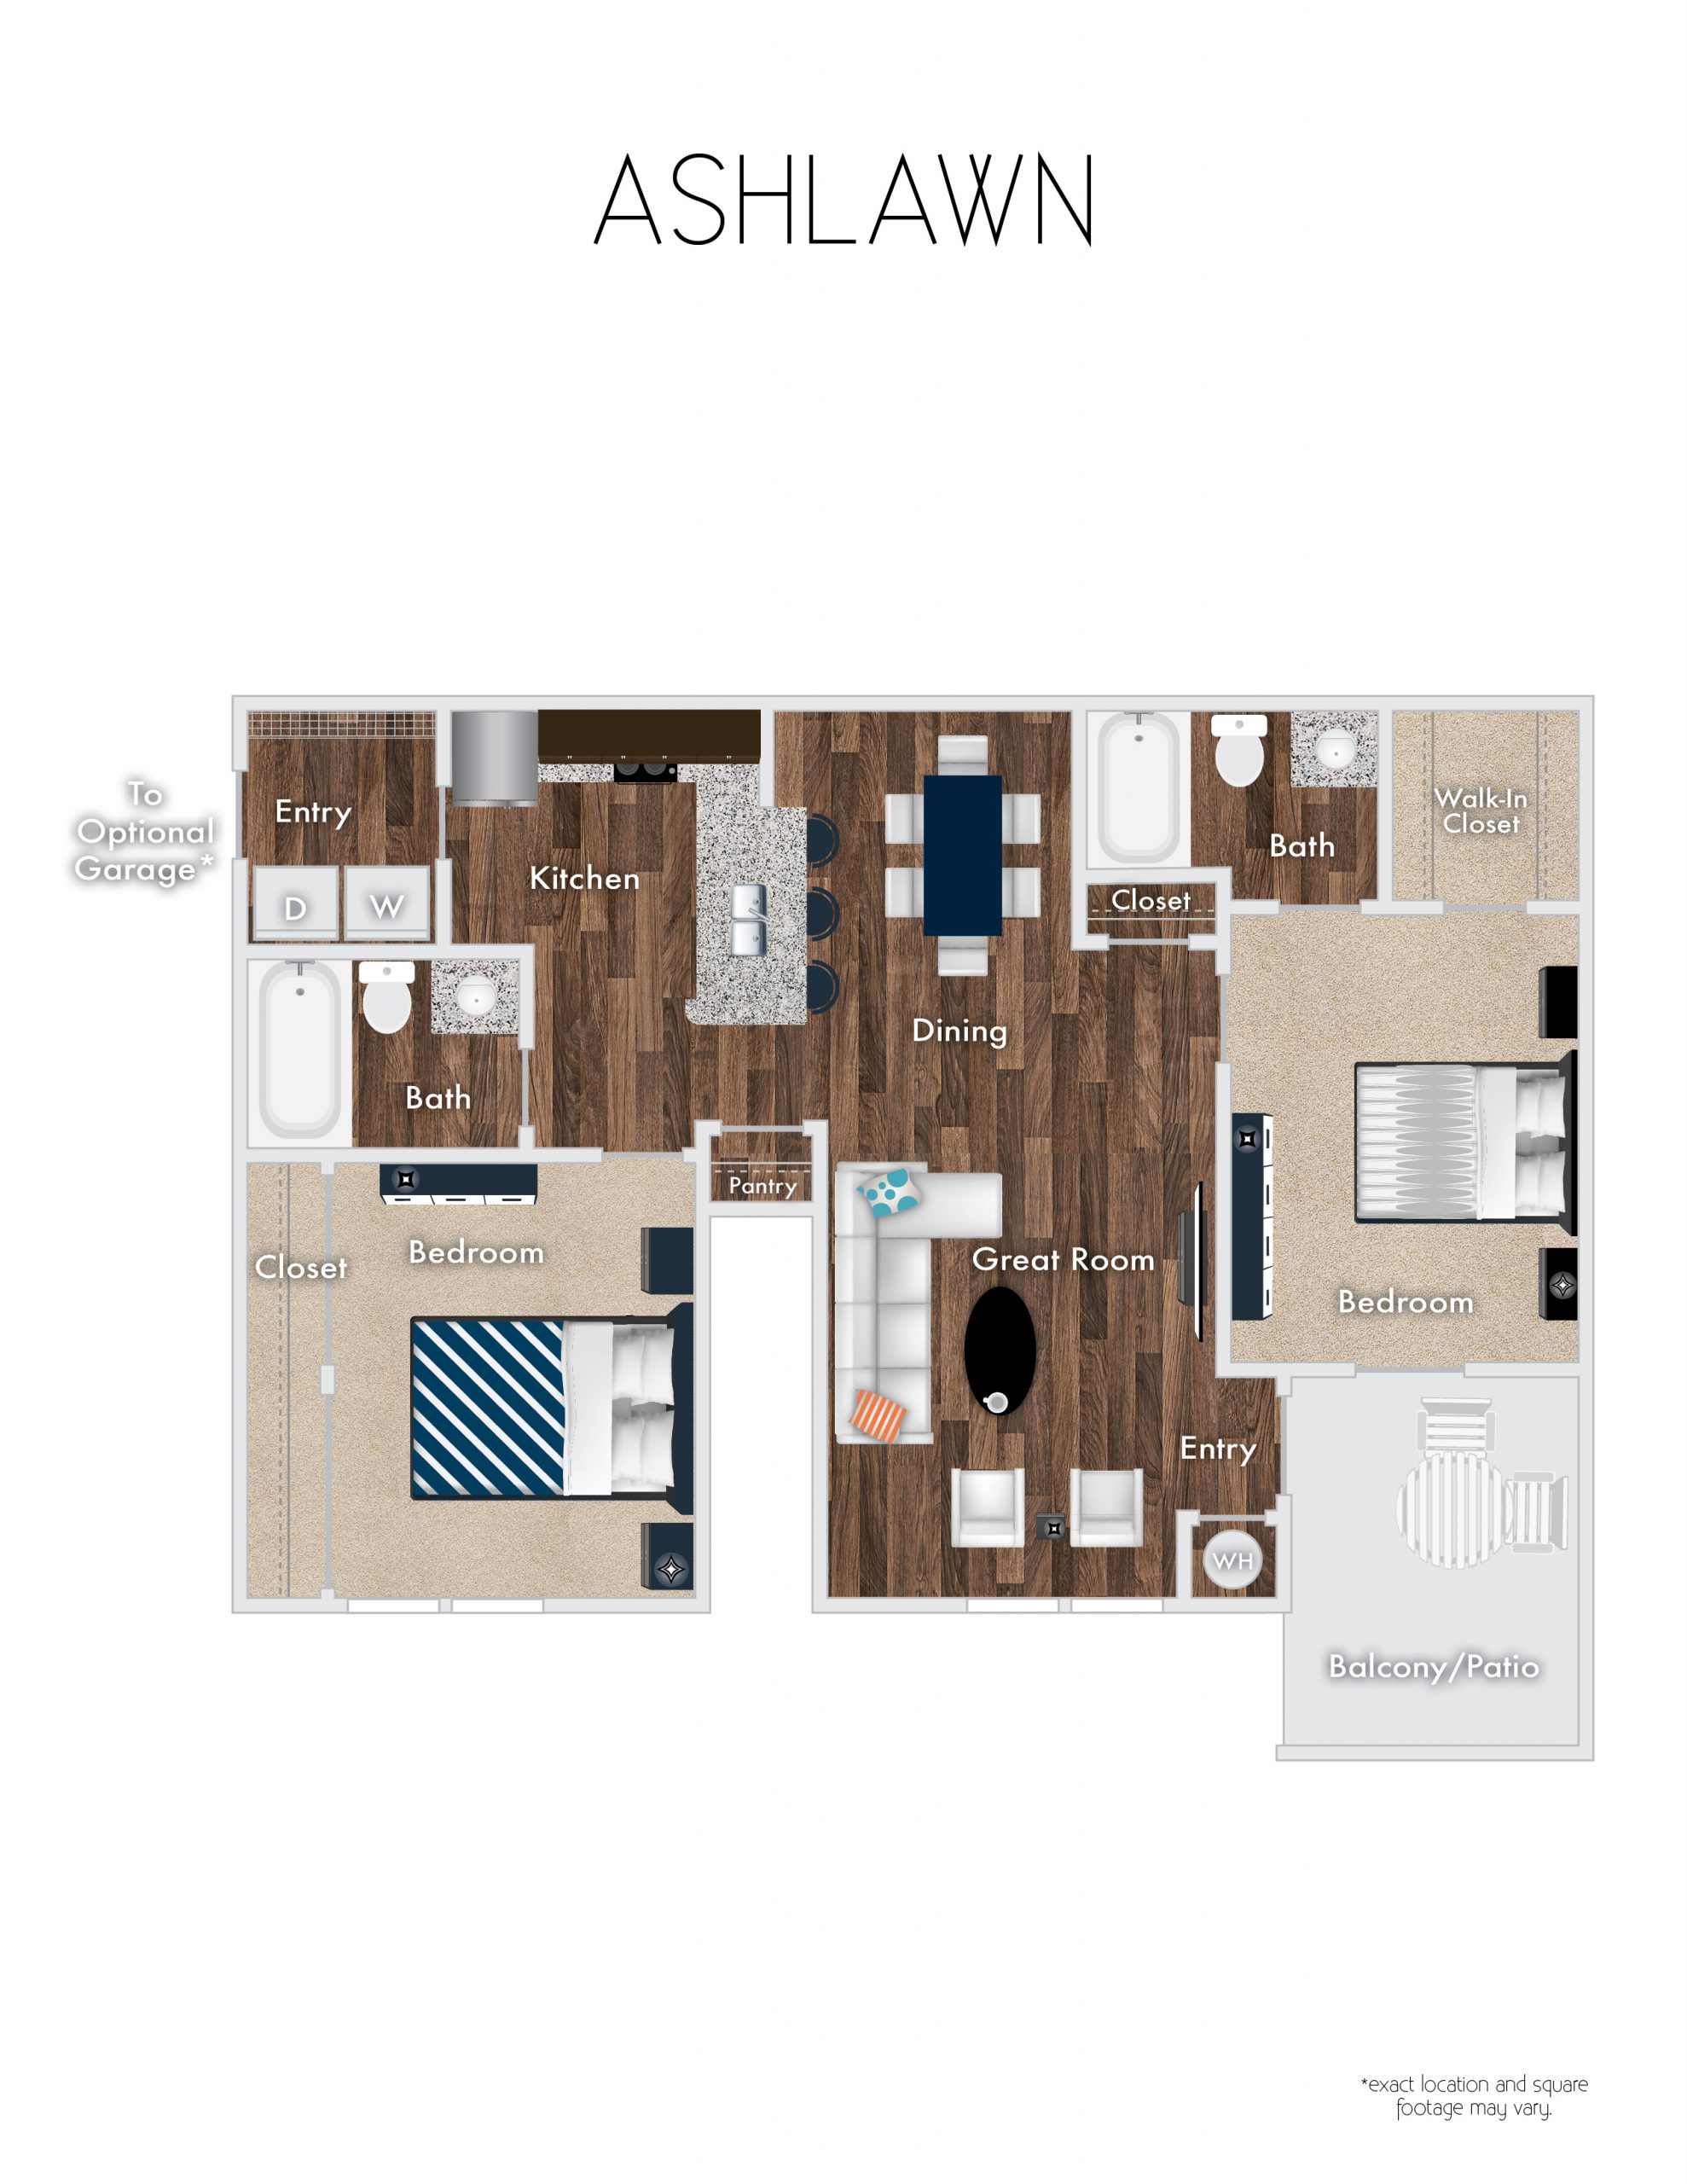 Ashlawn Floor Plan, 2 Bedroom, 2 Bath with optional garage.